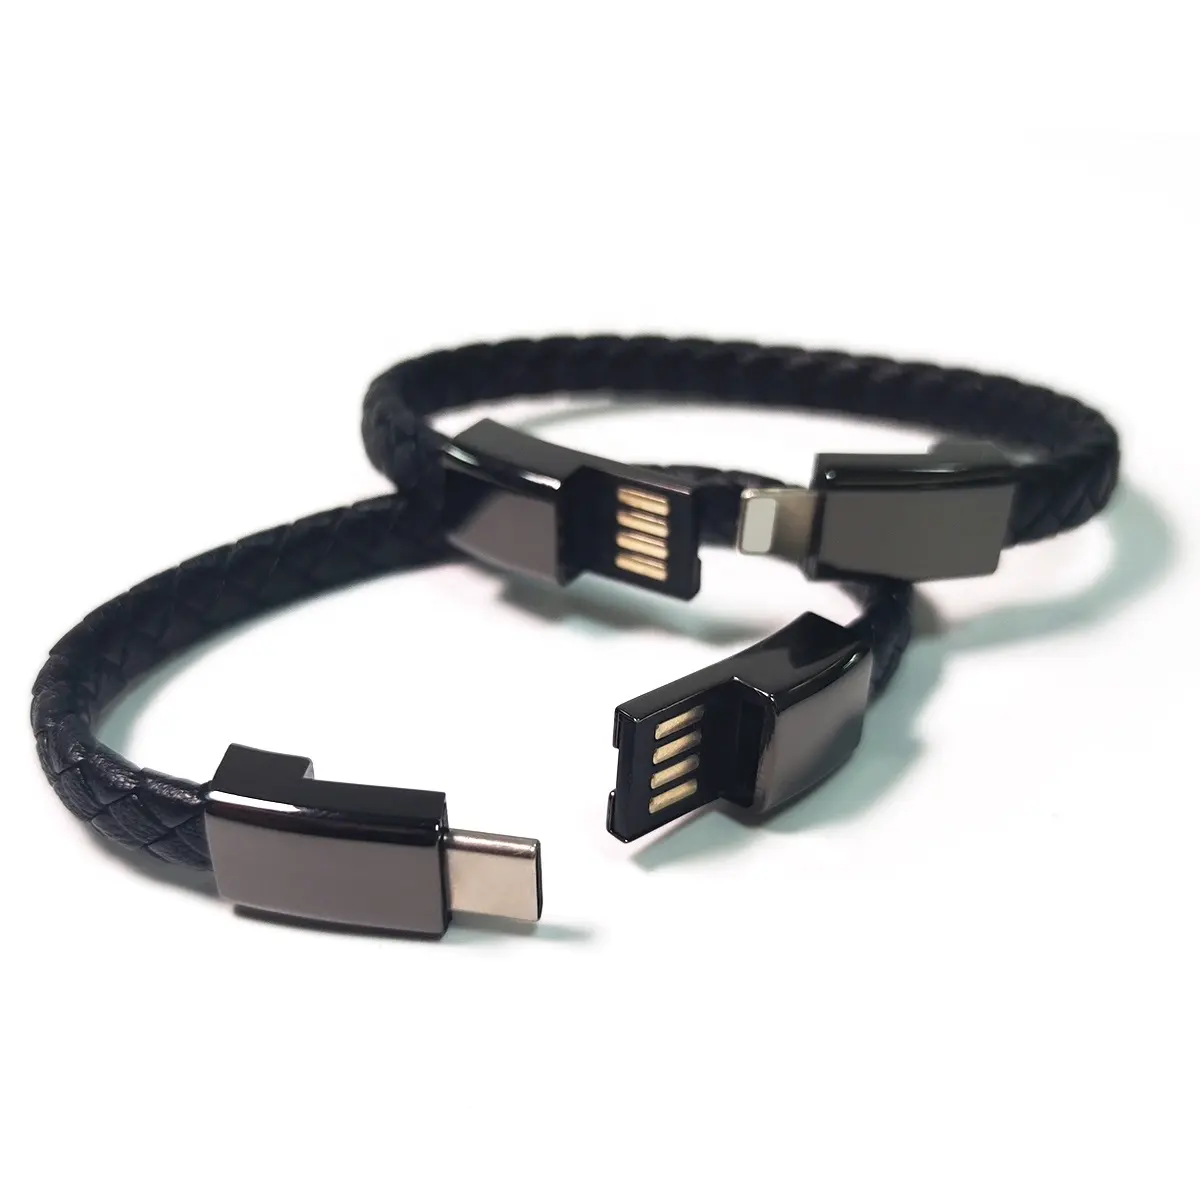 USB סוג C כבל צמיד לגברים סמסונג S8 קצר נייד עור <span class=keywords><strong>מטען</strong></span>